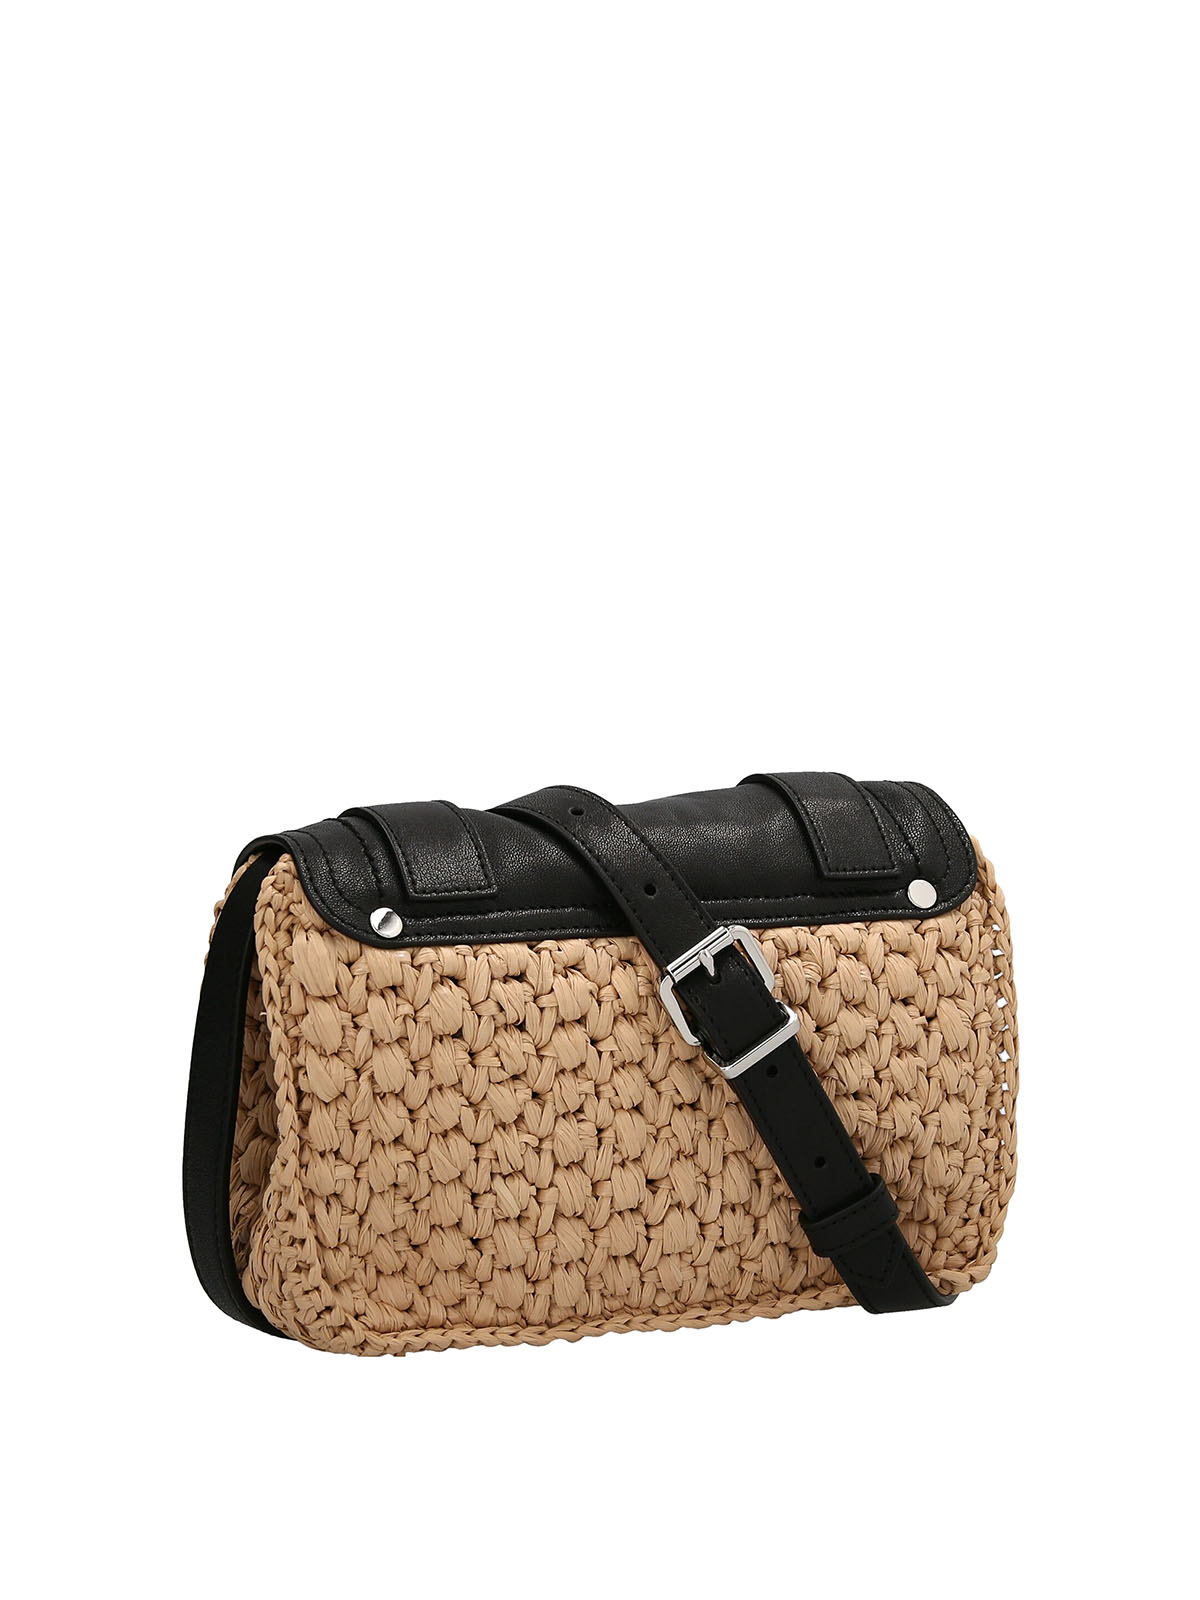 Proenza Schouler Lambskin Leather Handbags